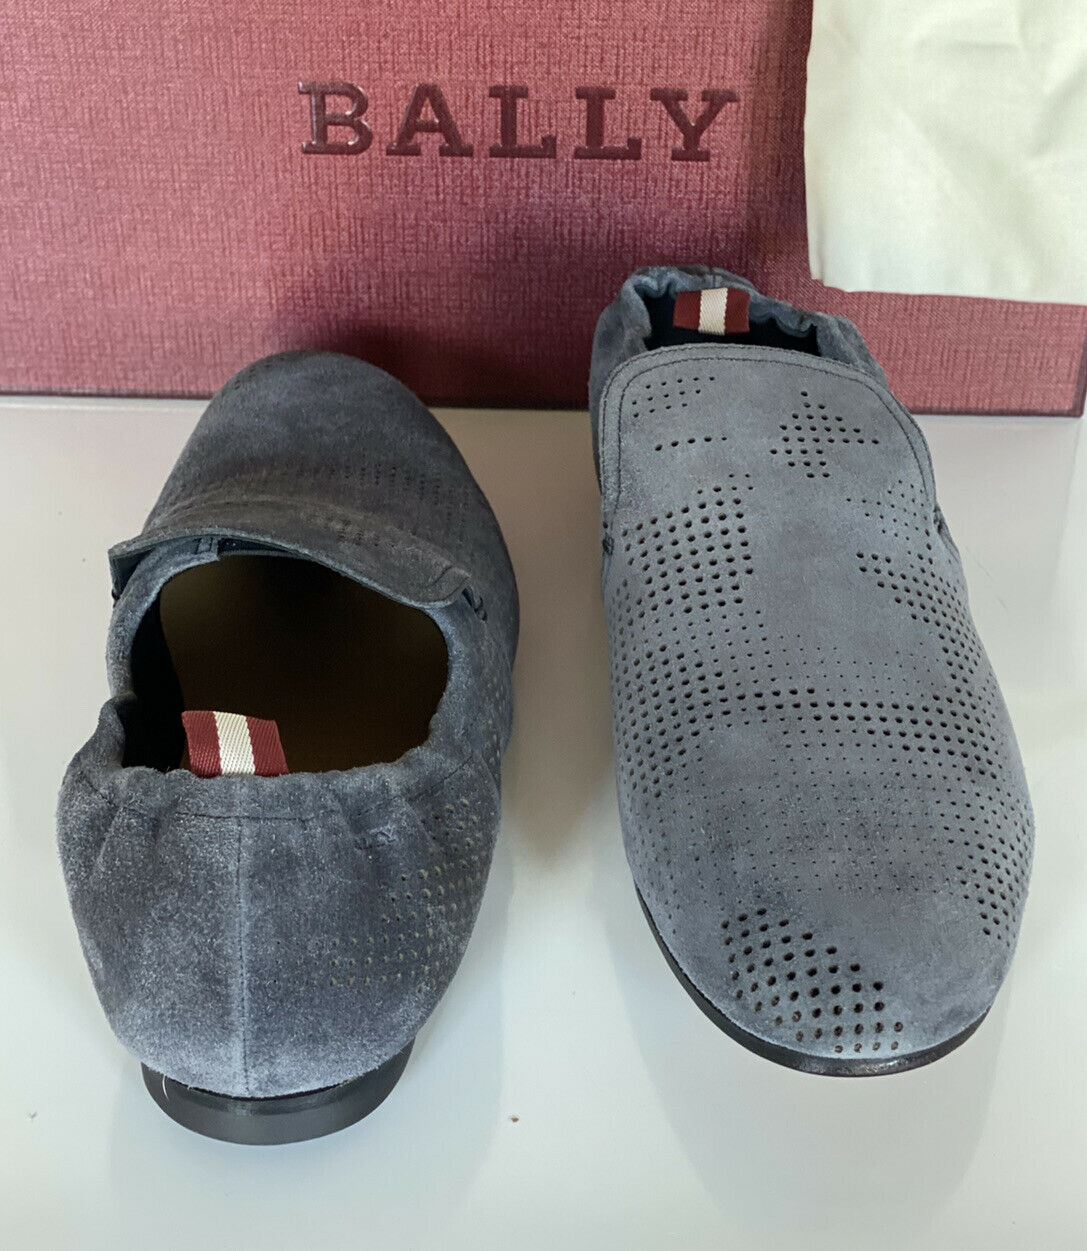 NIB Bally Pleian Kalbsleder-Loafer für Herren, Rauchgrau, 8,5 US 6231388 